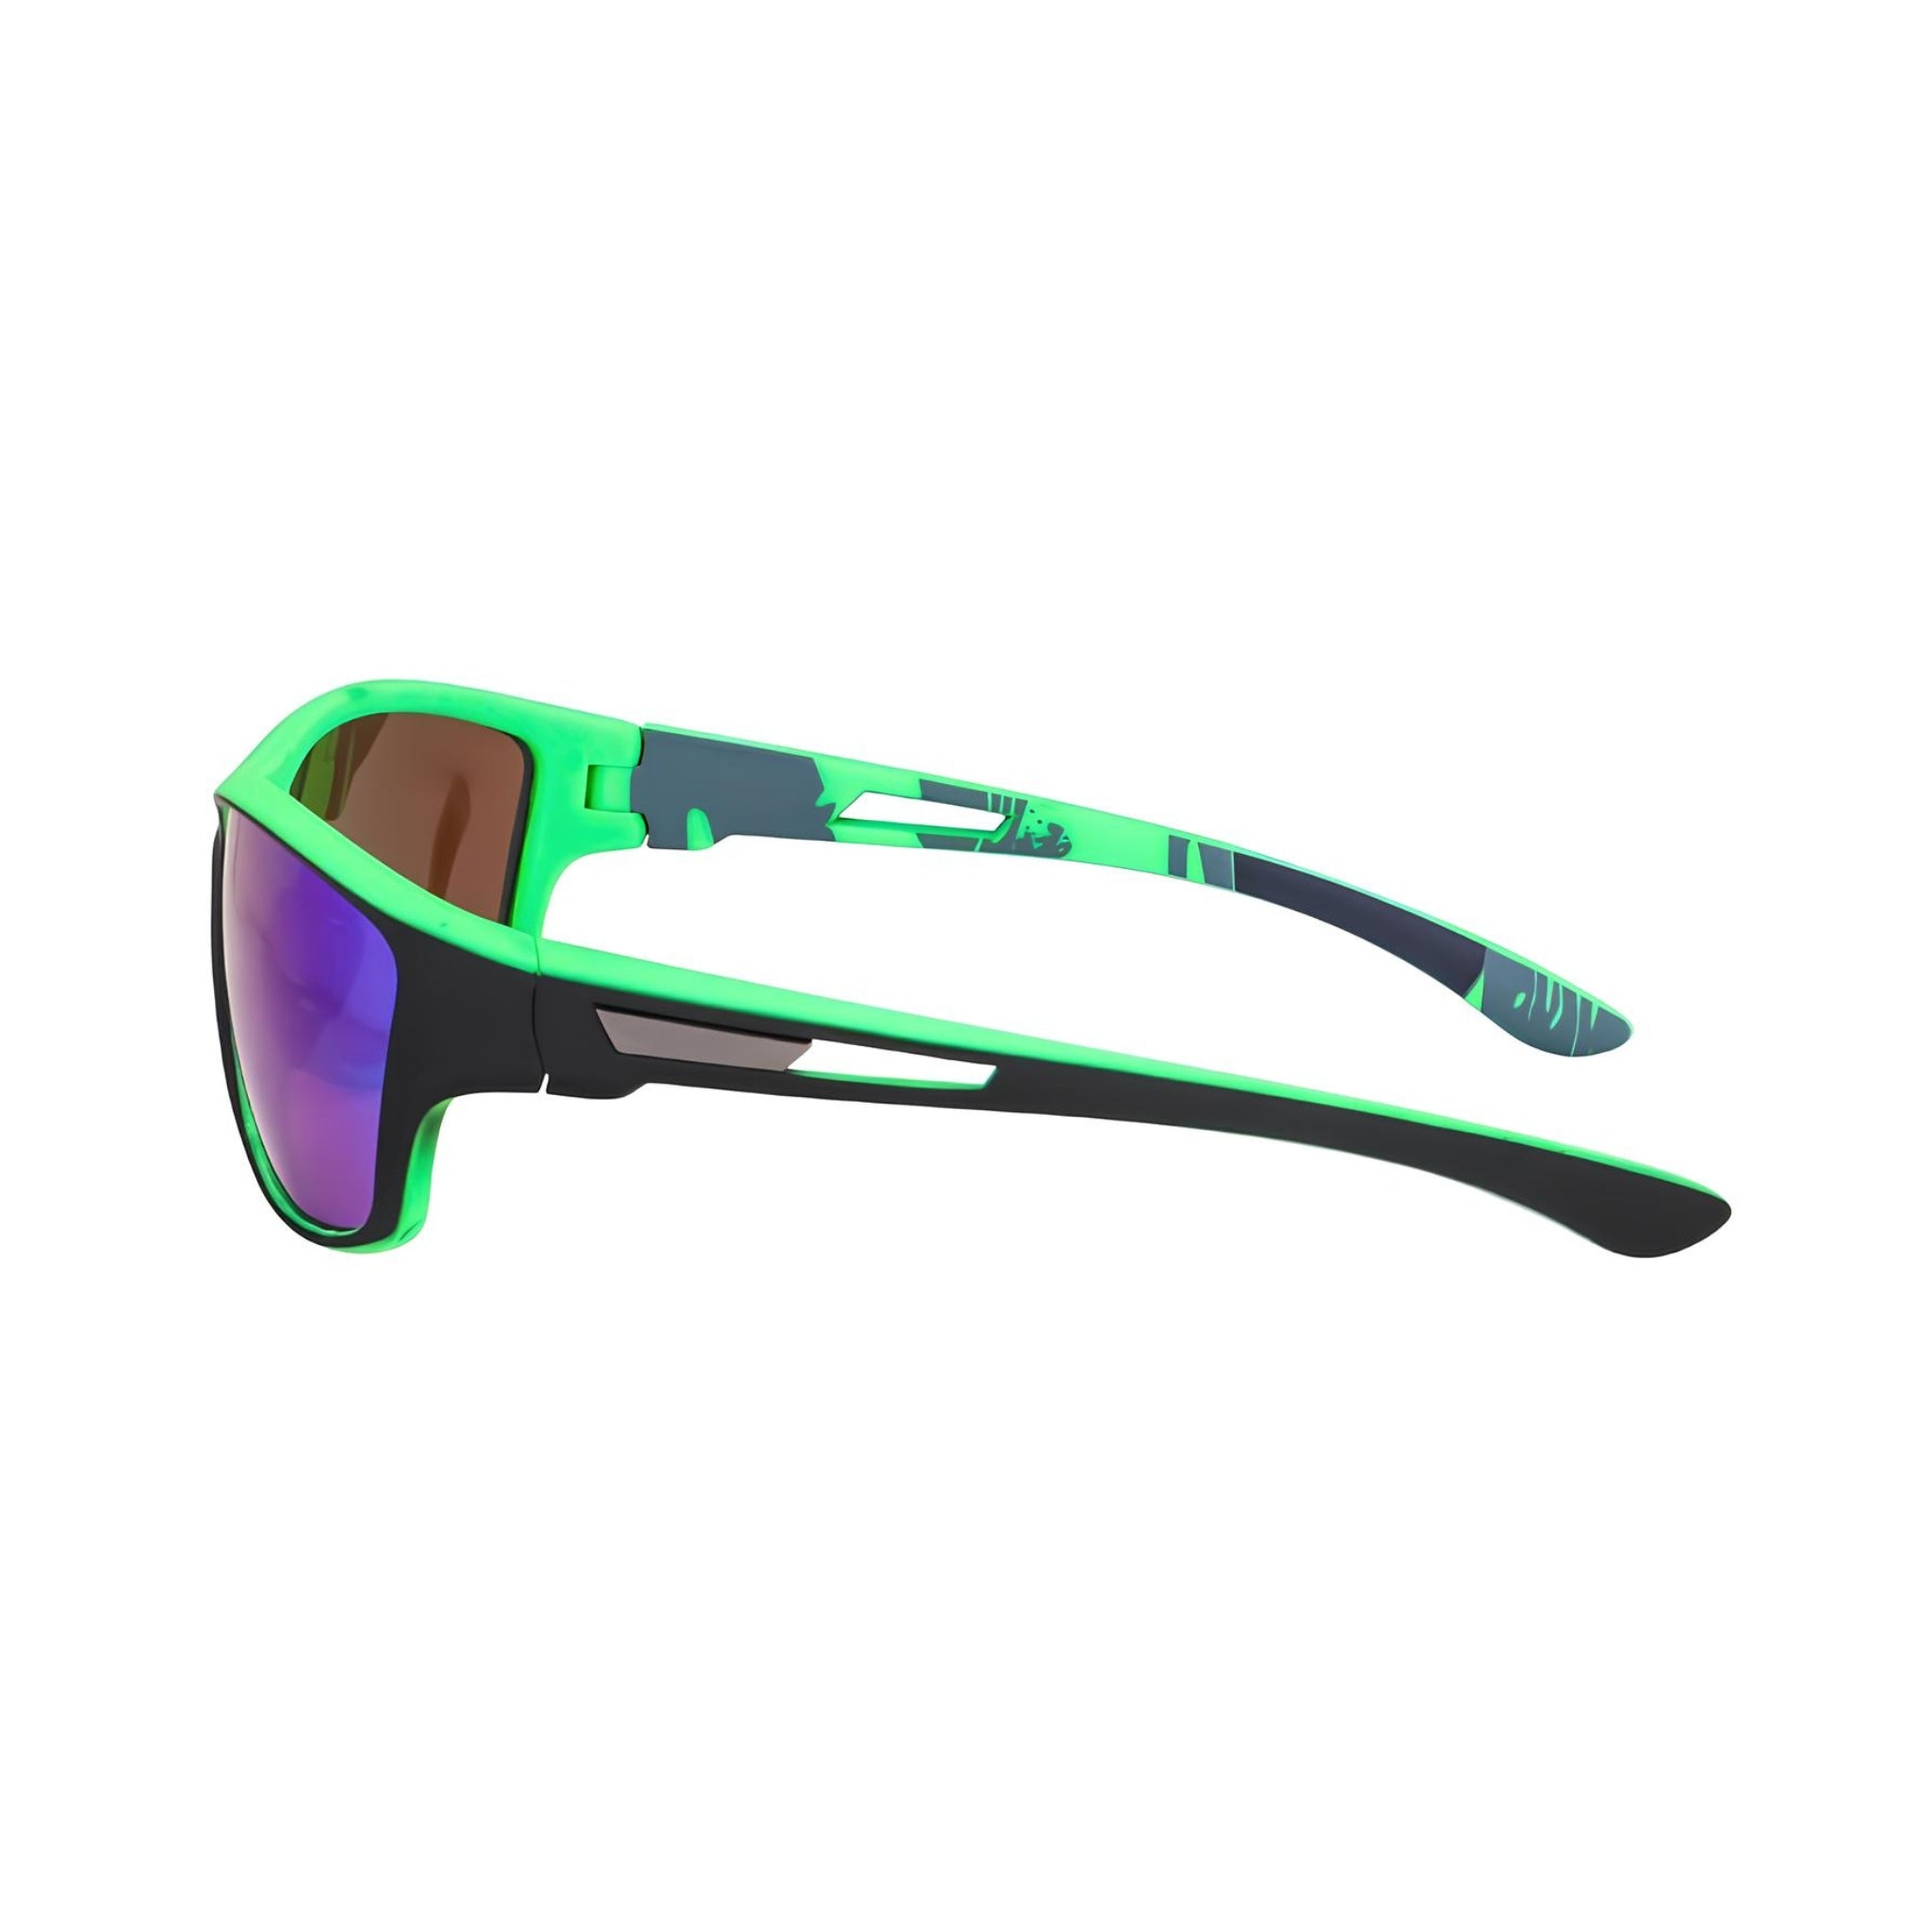 Xplorer Series Polarized Sports Sunglasses - Green Mirrored